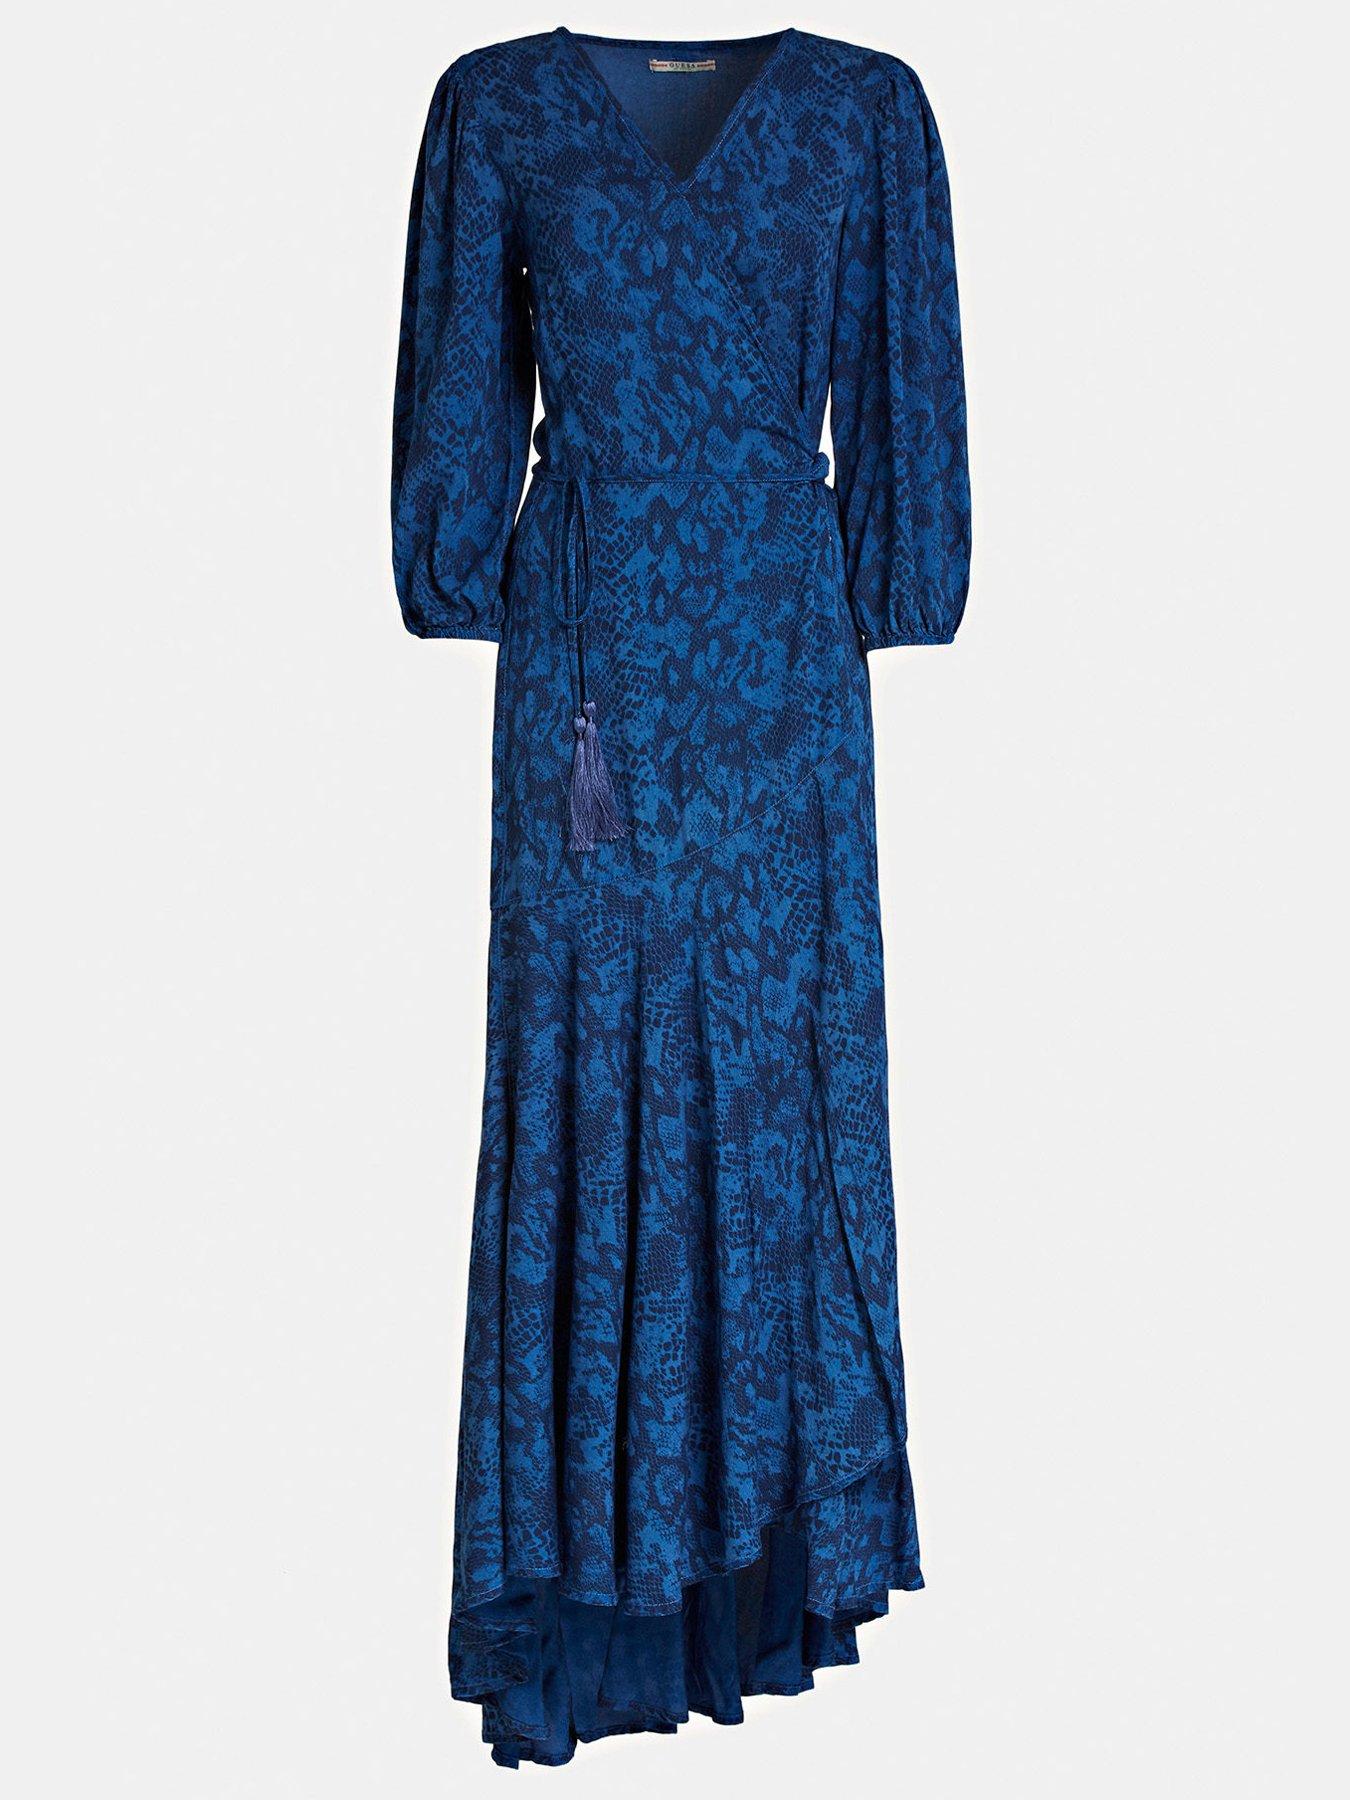 Guess Candice Snake Print Wrap Dress - Blue | very.co.uk